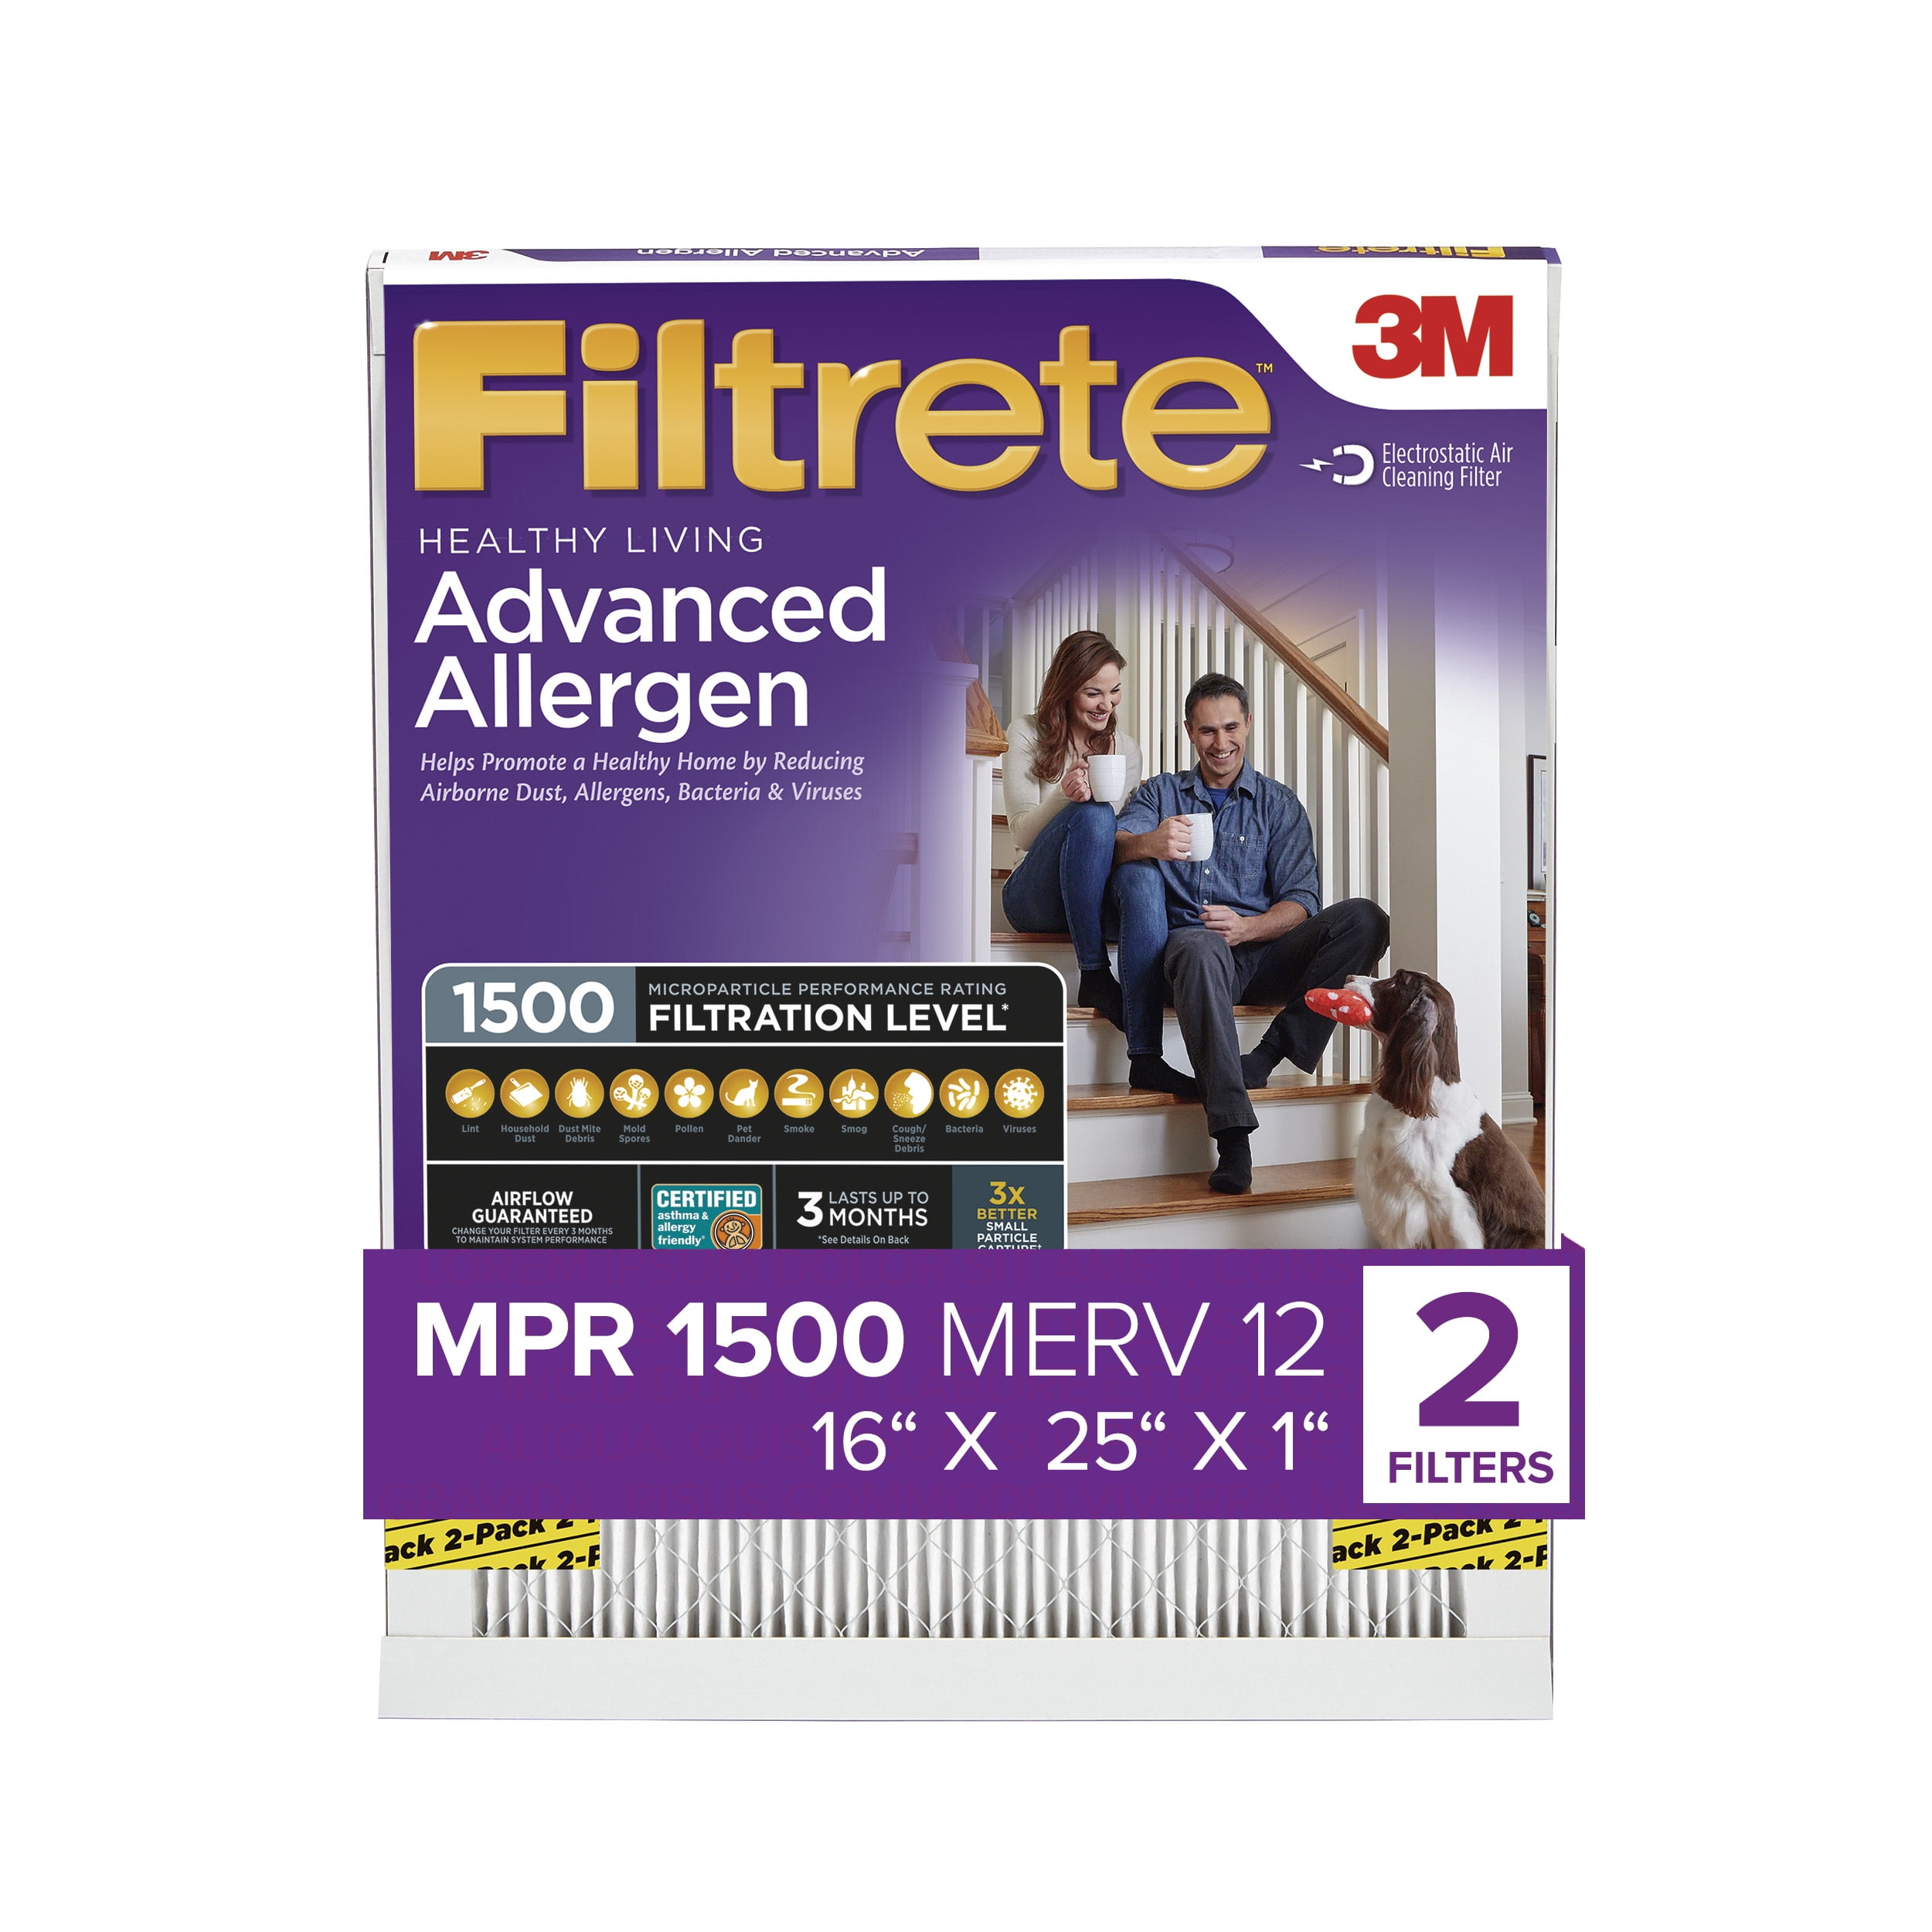 Filtrete by 3M, 16x25x1, MERV 12, Advanced Allergen Reduction HVAC Furnace Air Filter, Captures Allergens, Bacteria, Viruses, 1500 MPR, 2 Filters